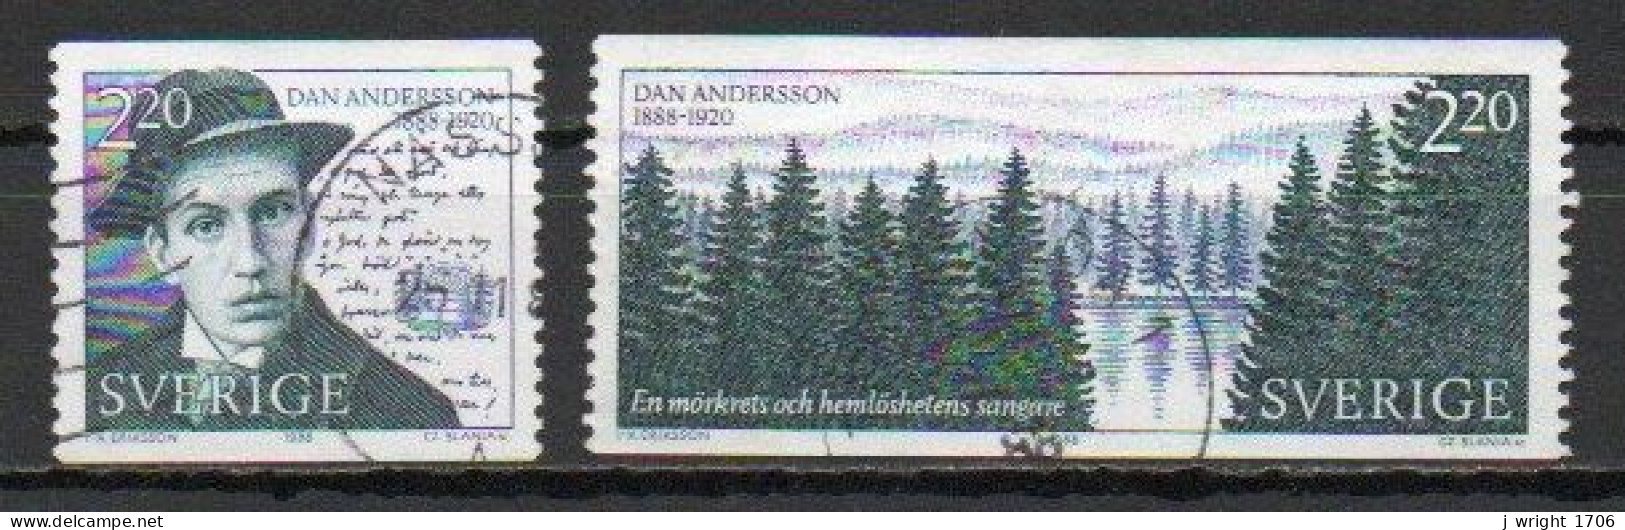 Sweden, 1988, Dan Andersson, Set, USED - Usati